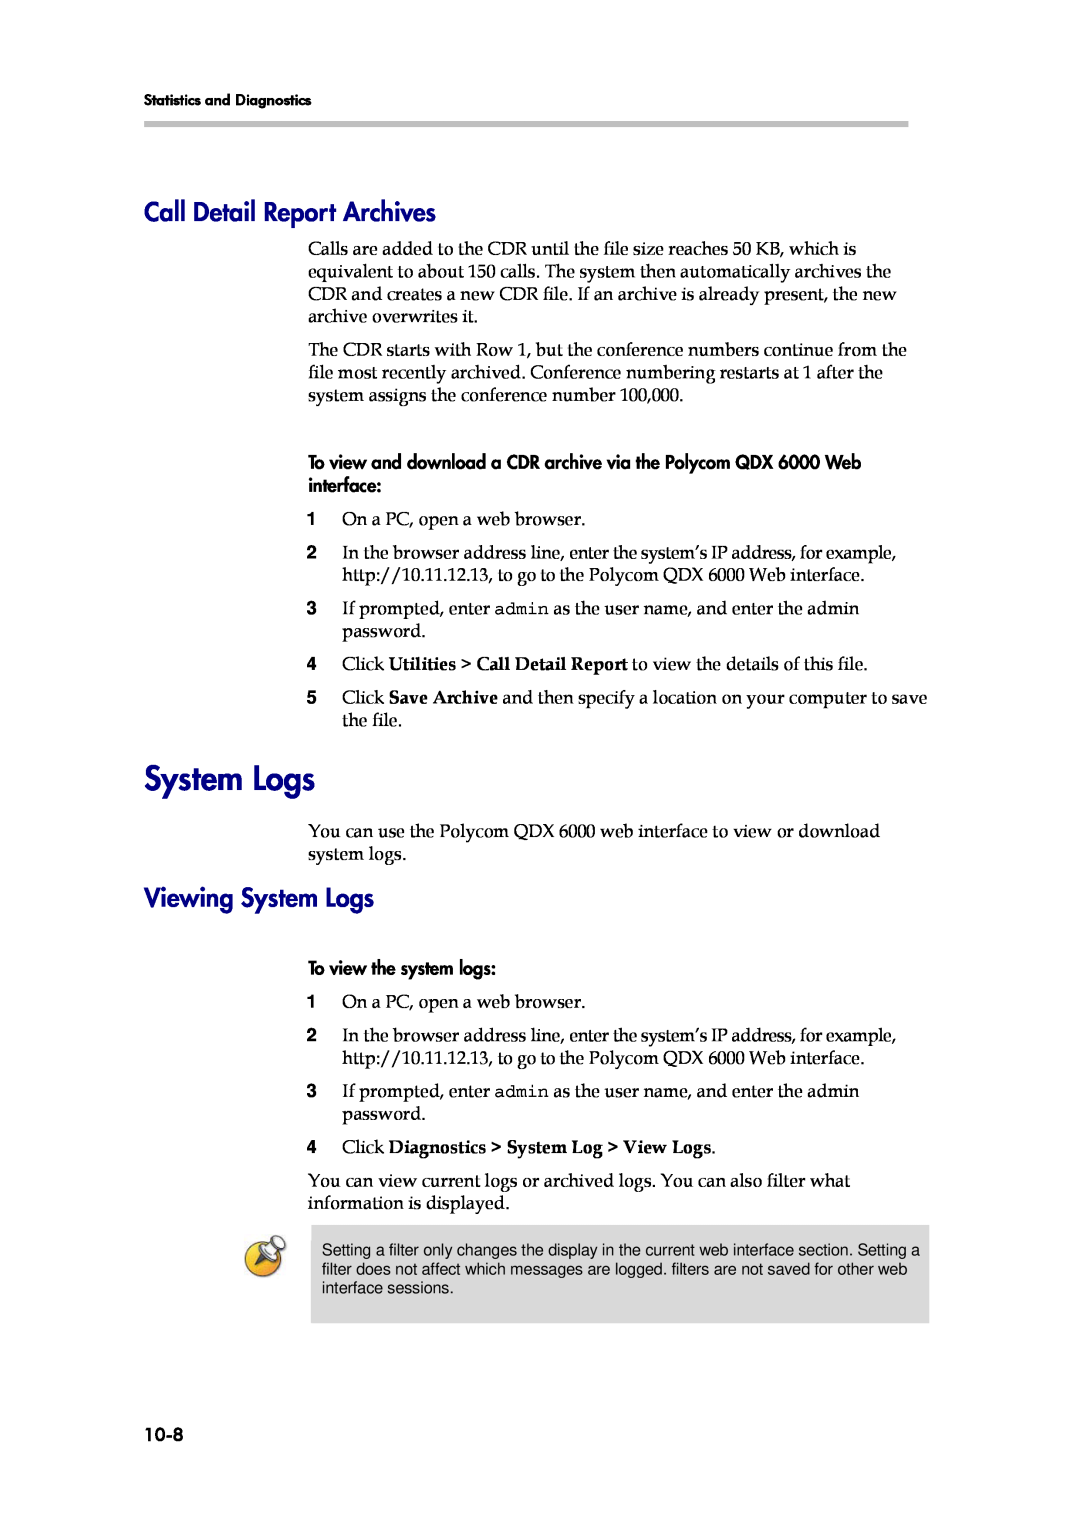 Polycom 6000 manual Call Detail Report Archives, Viewing System Logs, Click Diagnostics System Log View Logs, 10-8 